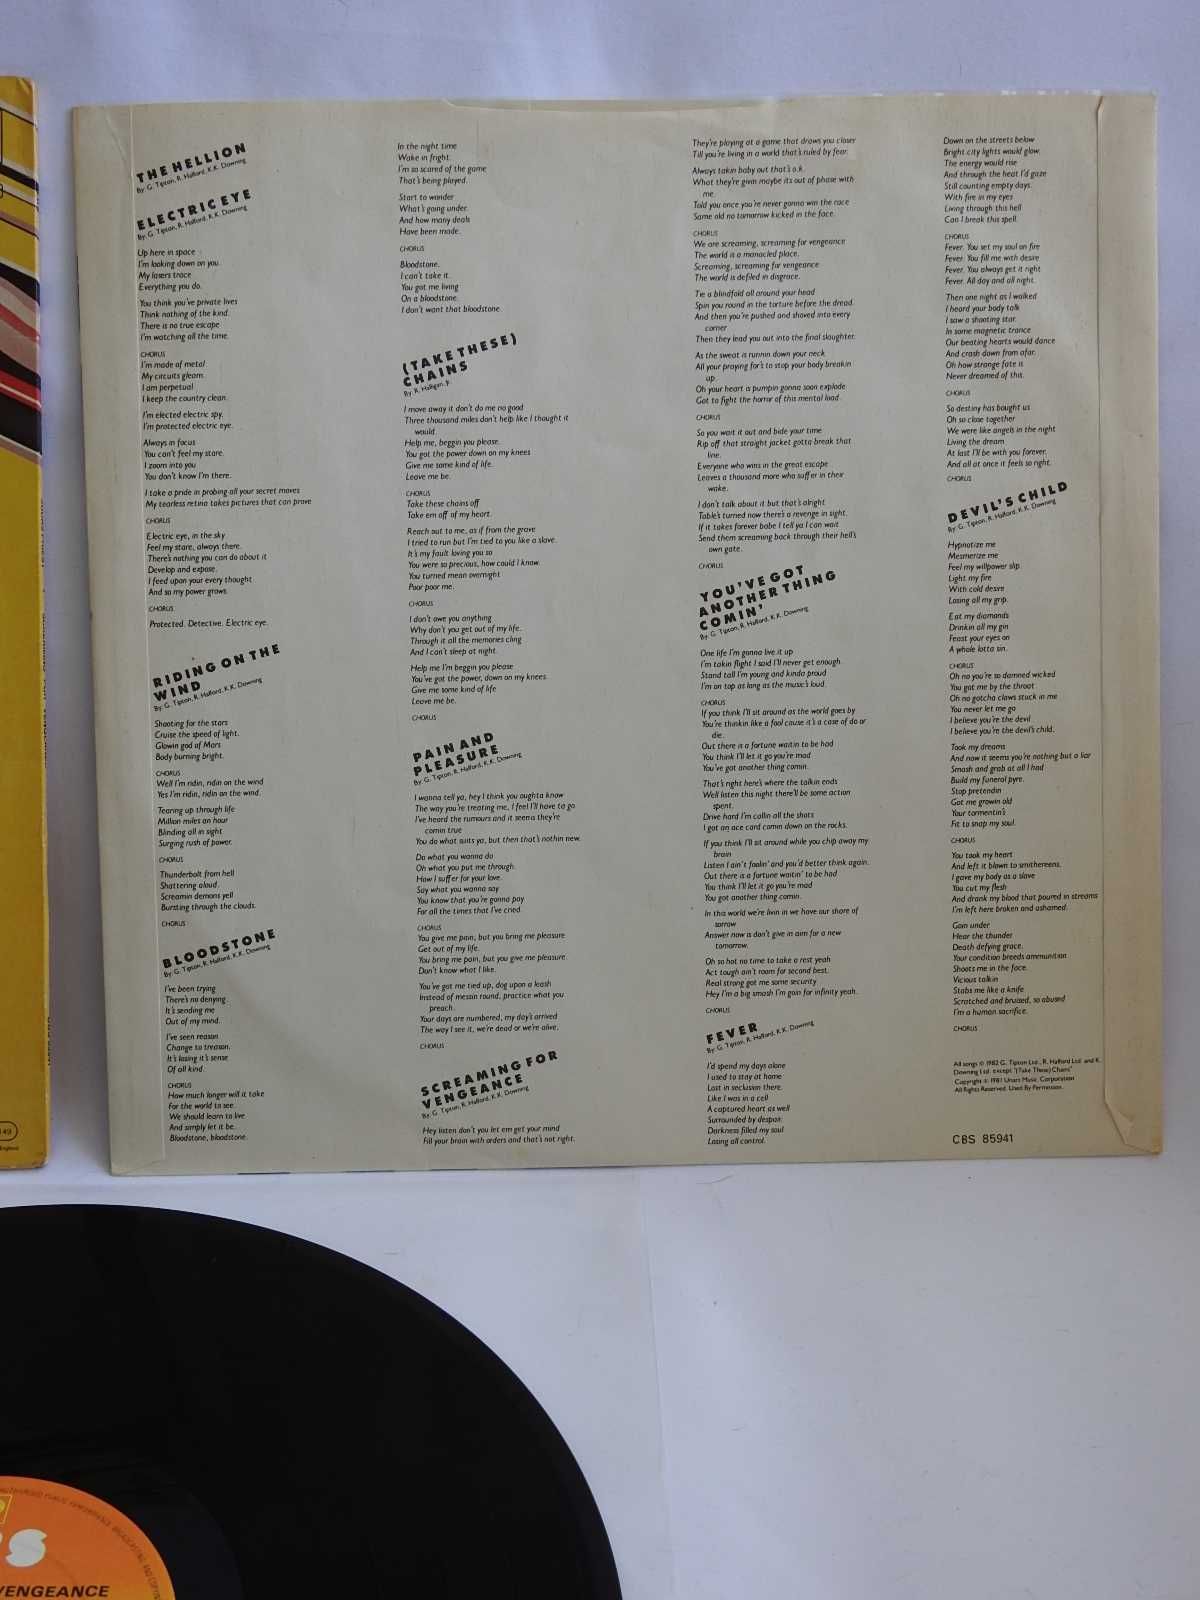 Judas Priest ‎Screaming For Vengeance LP UK пластинка Британия 1982 EX